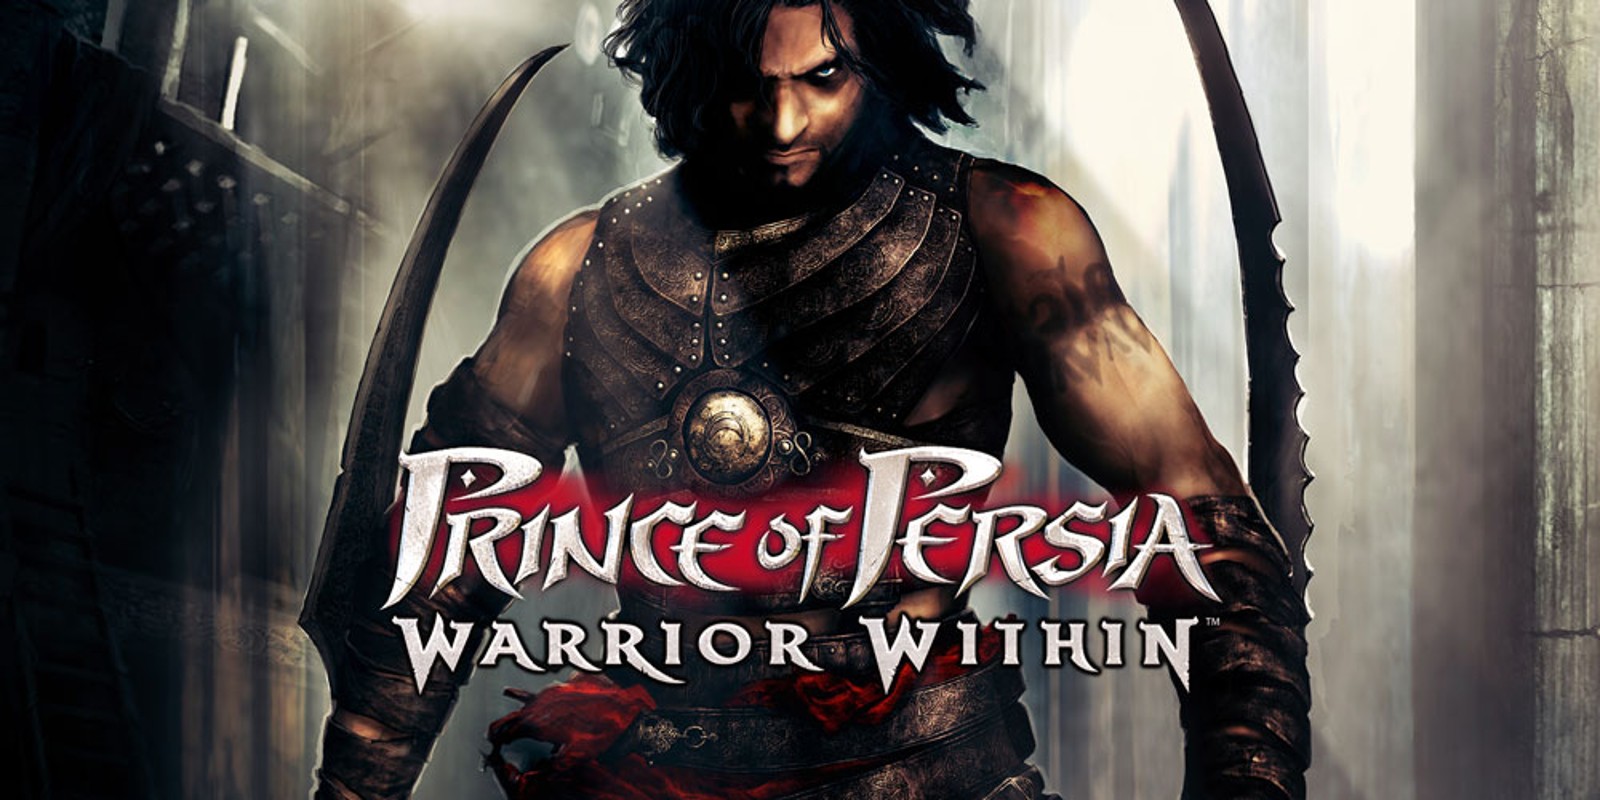 Prince Of Persia: Warrior Within, Nintendo GameCube